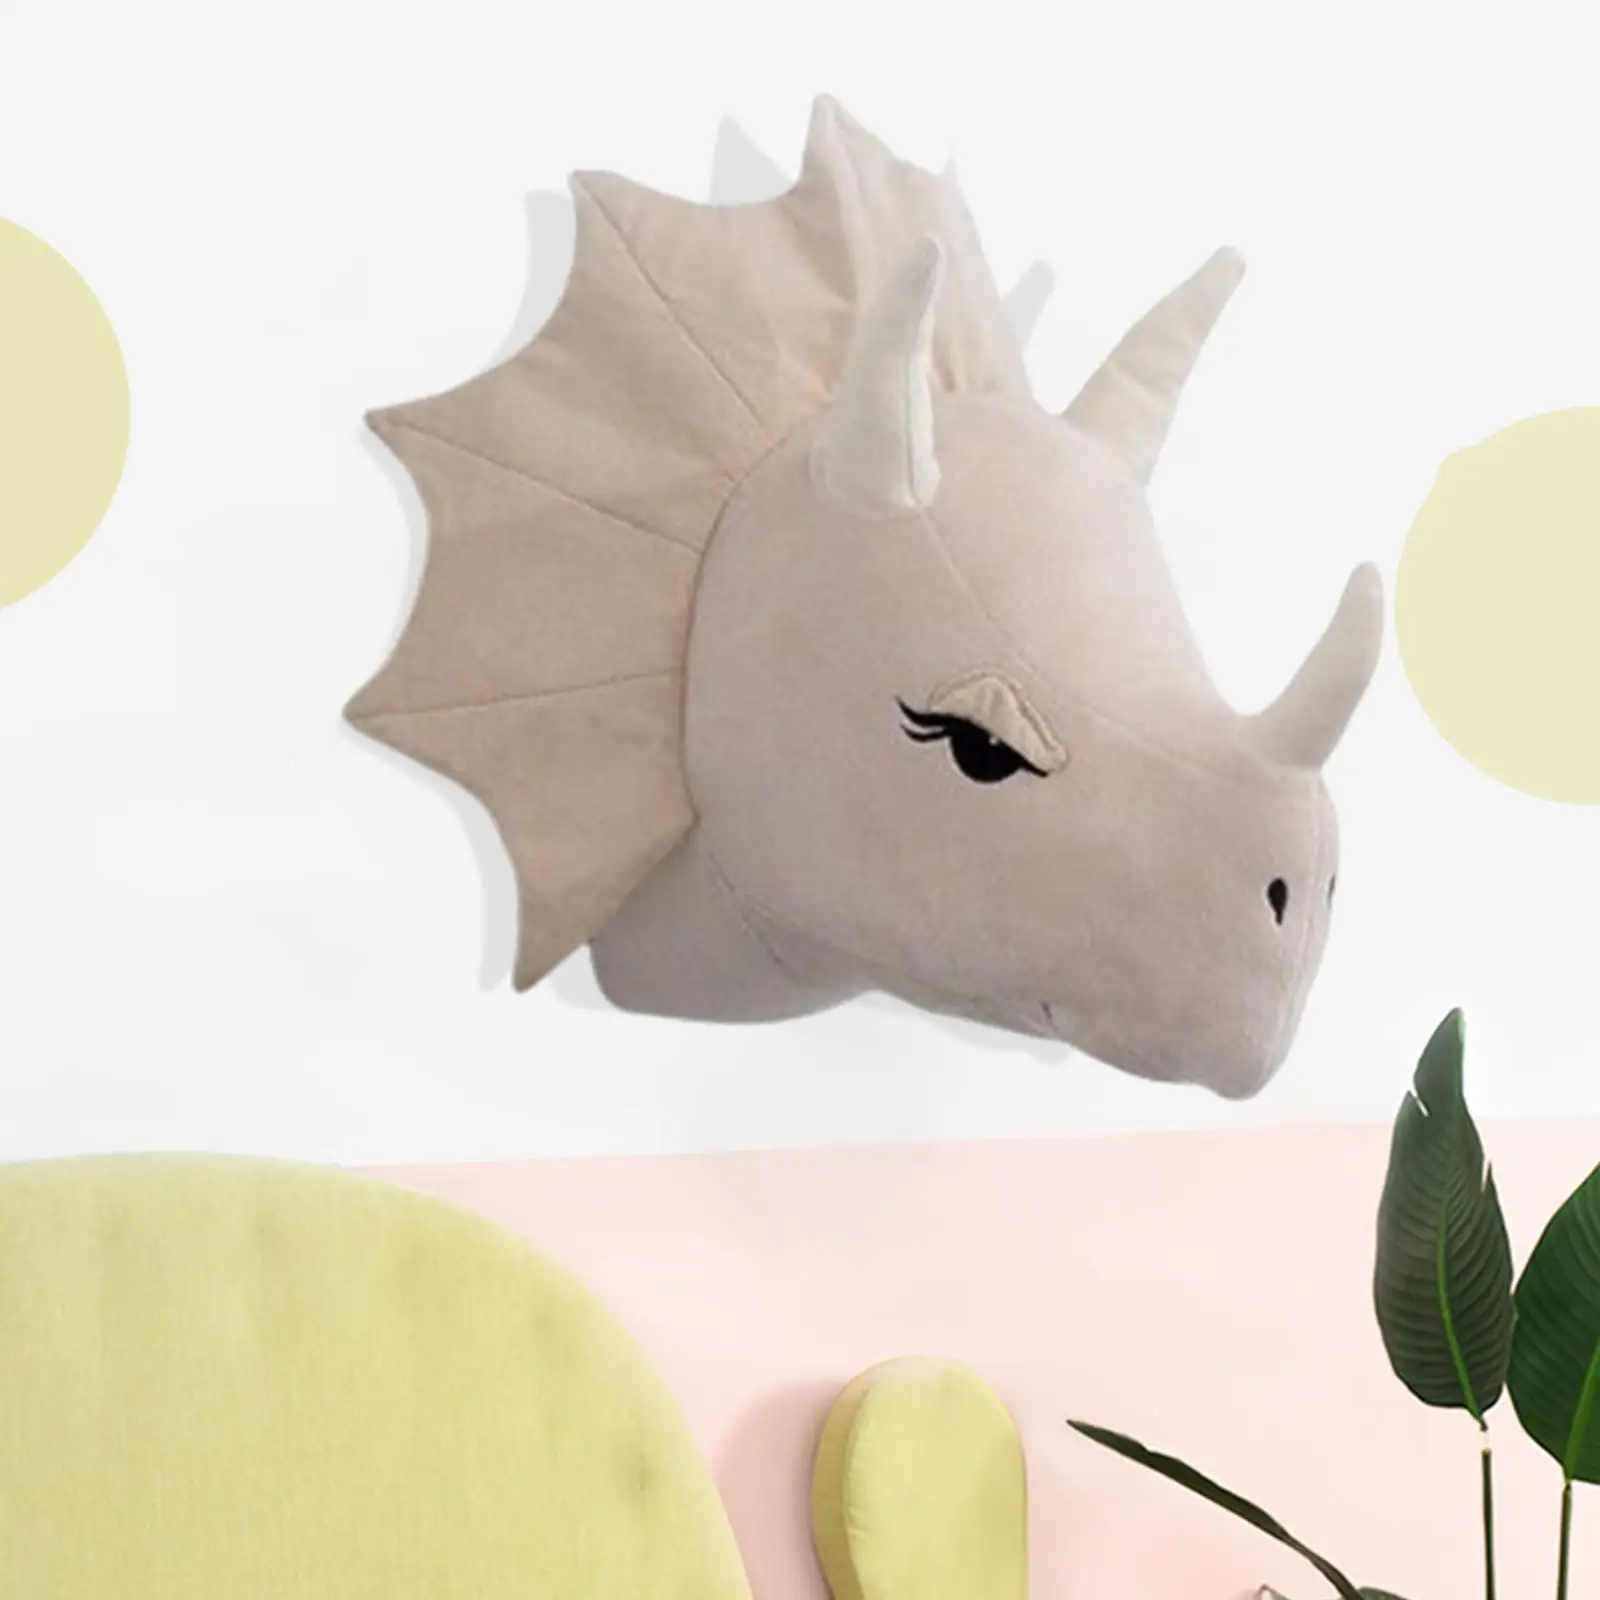 3D Cute Dinosaur Head Wall Hanging Decor Stuffed Plush Toy Pendent Animals Head